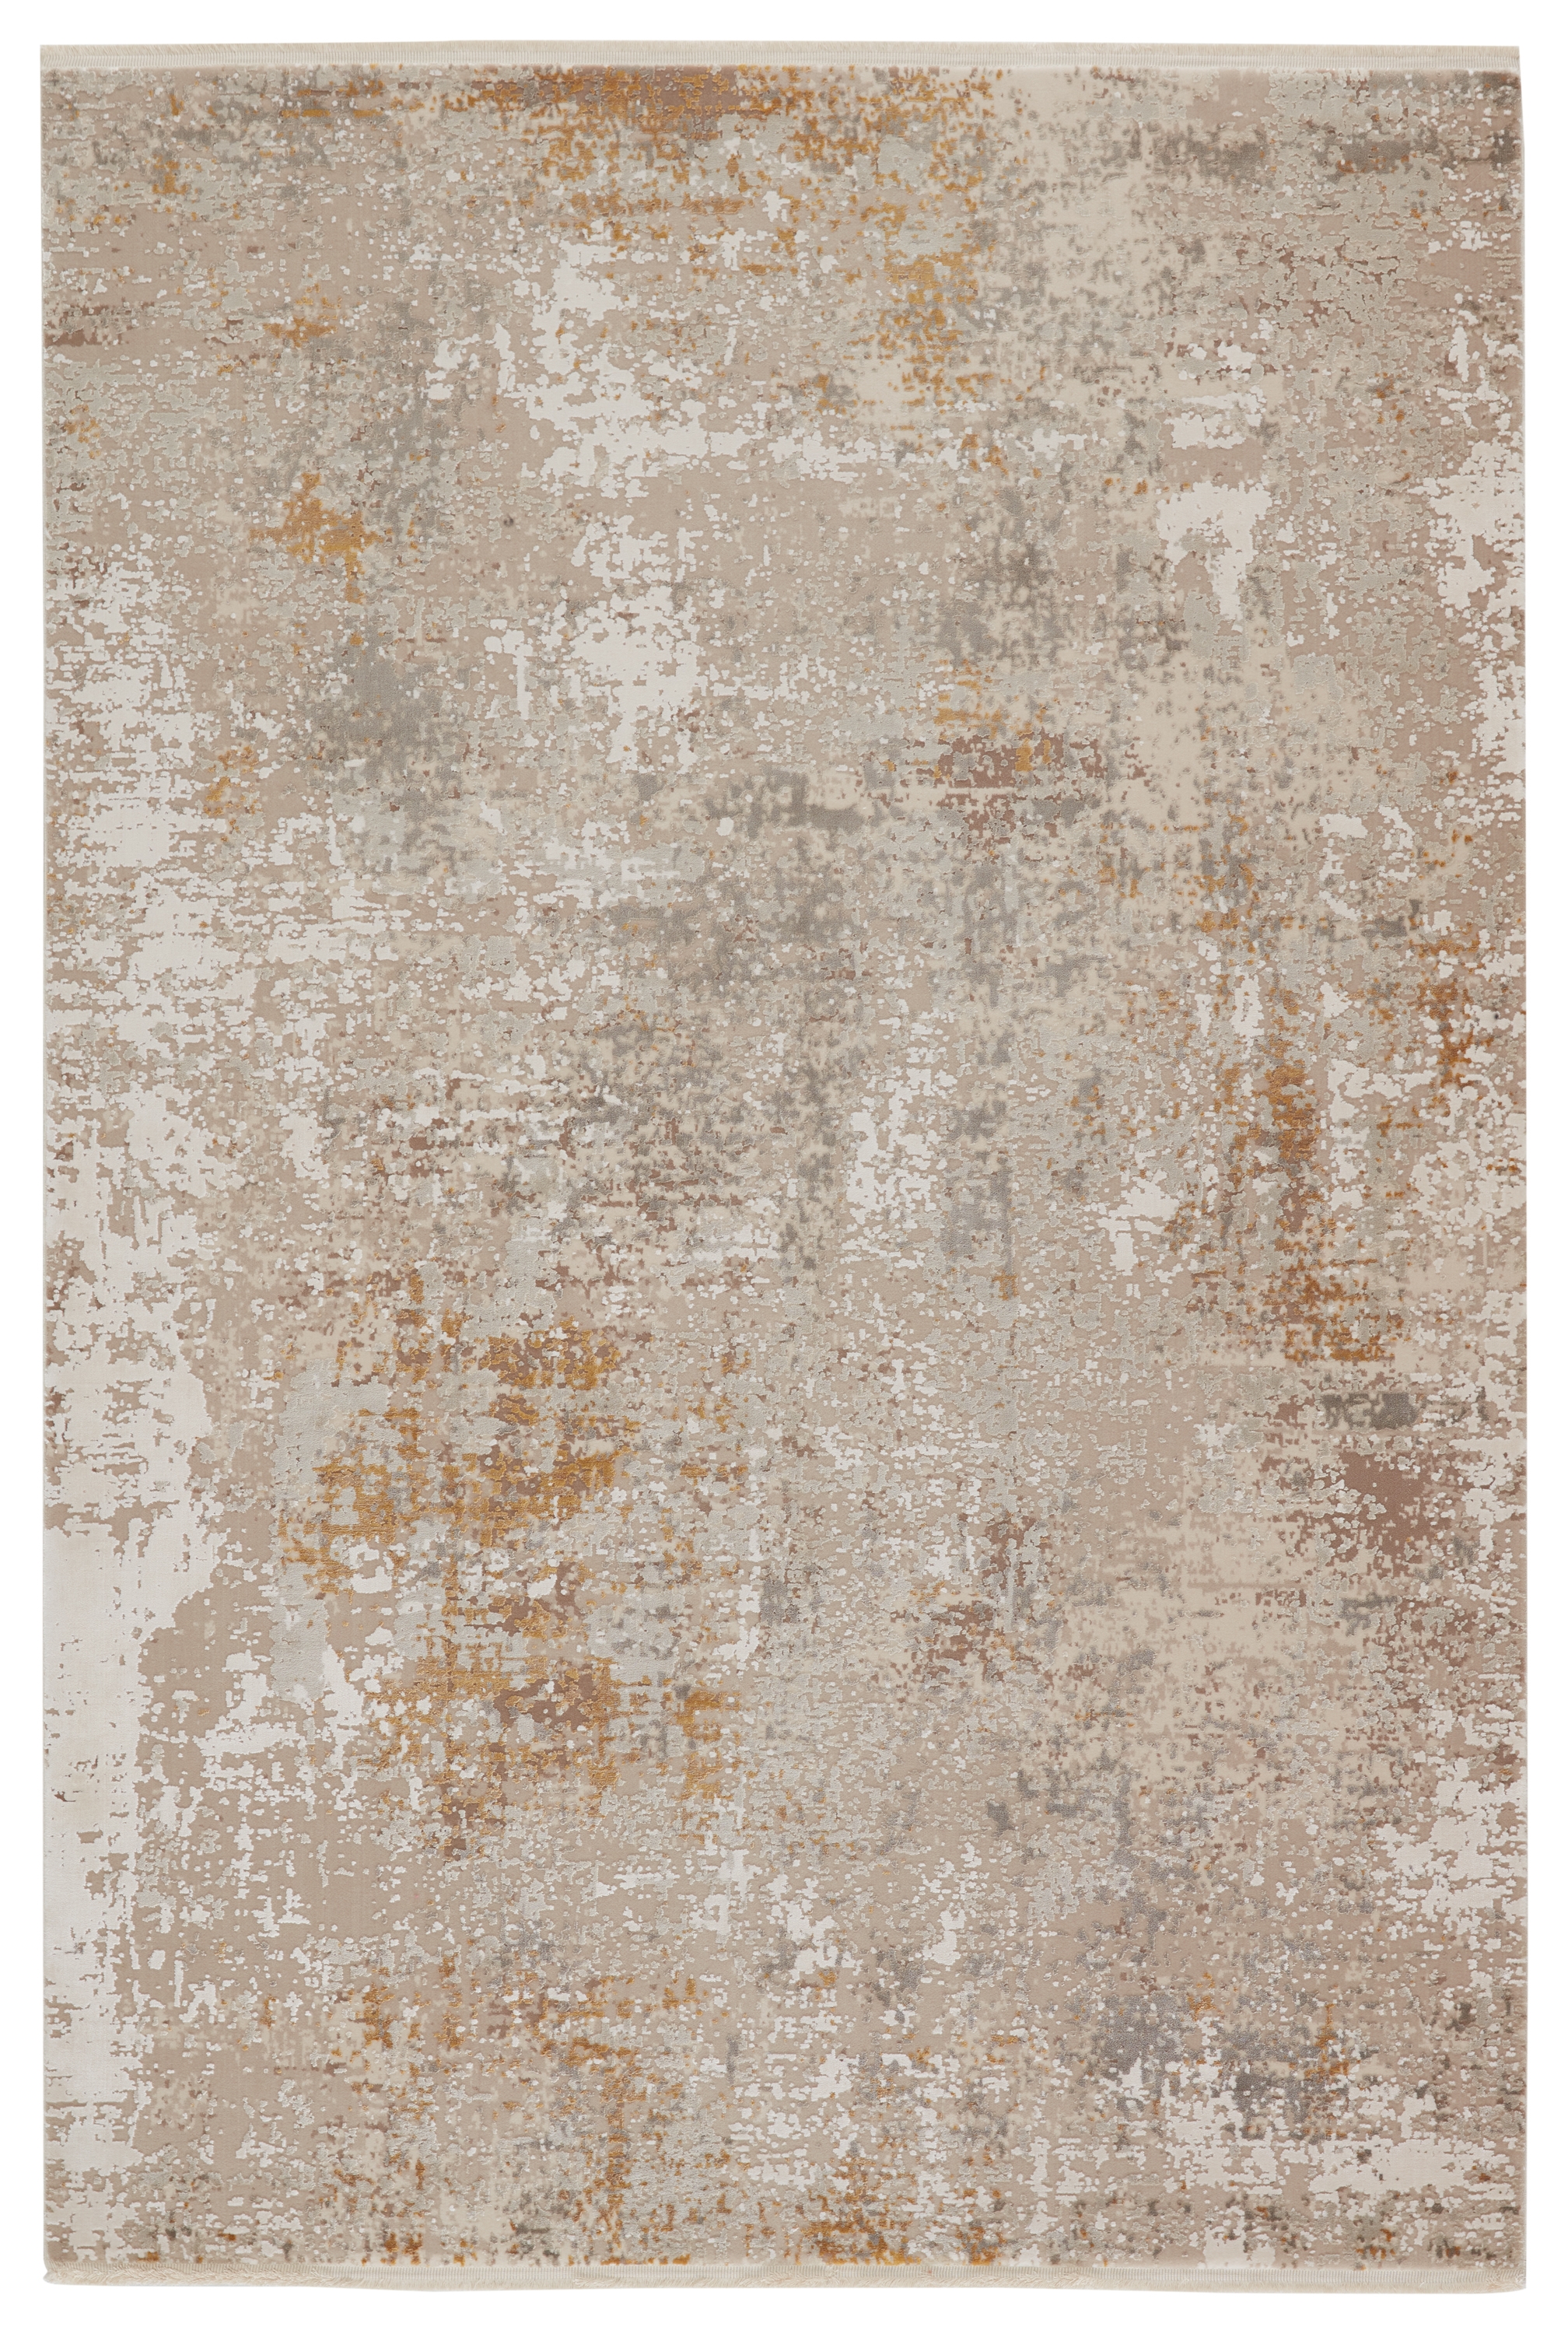 Henson Abstract Gray/ Gold Area Rug (5'X8') - Image 0